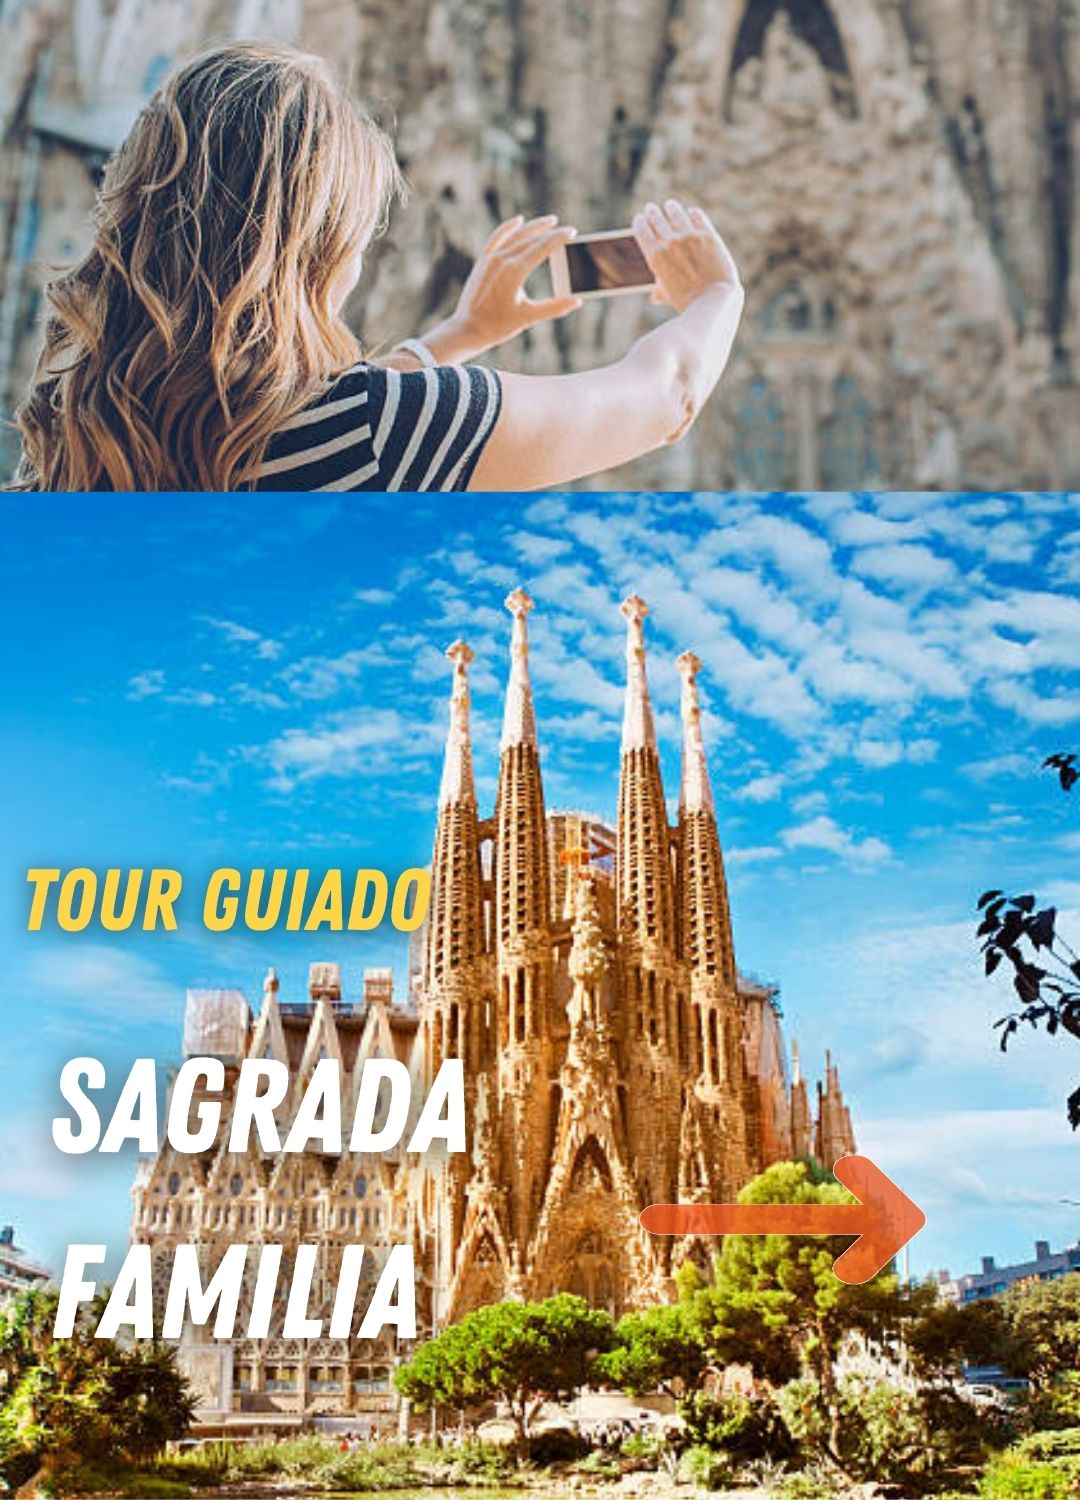 Sagrada Familia today